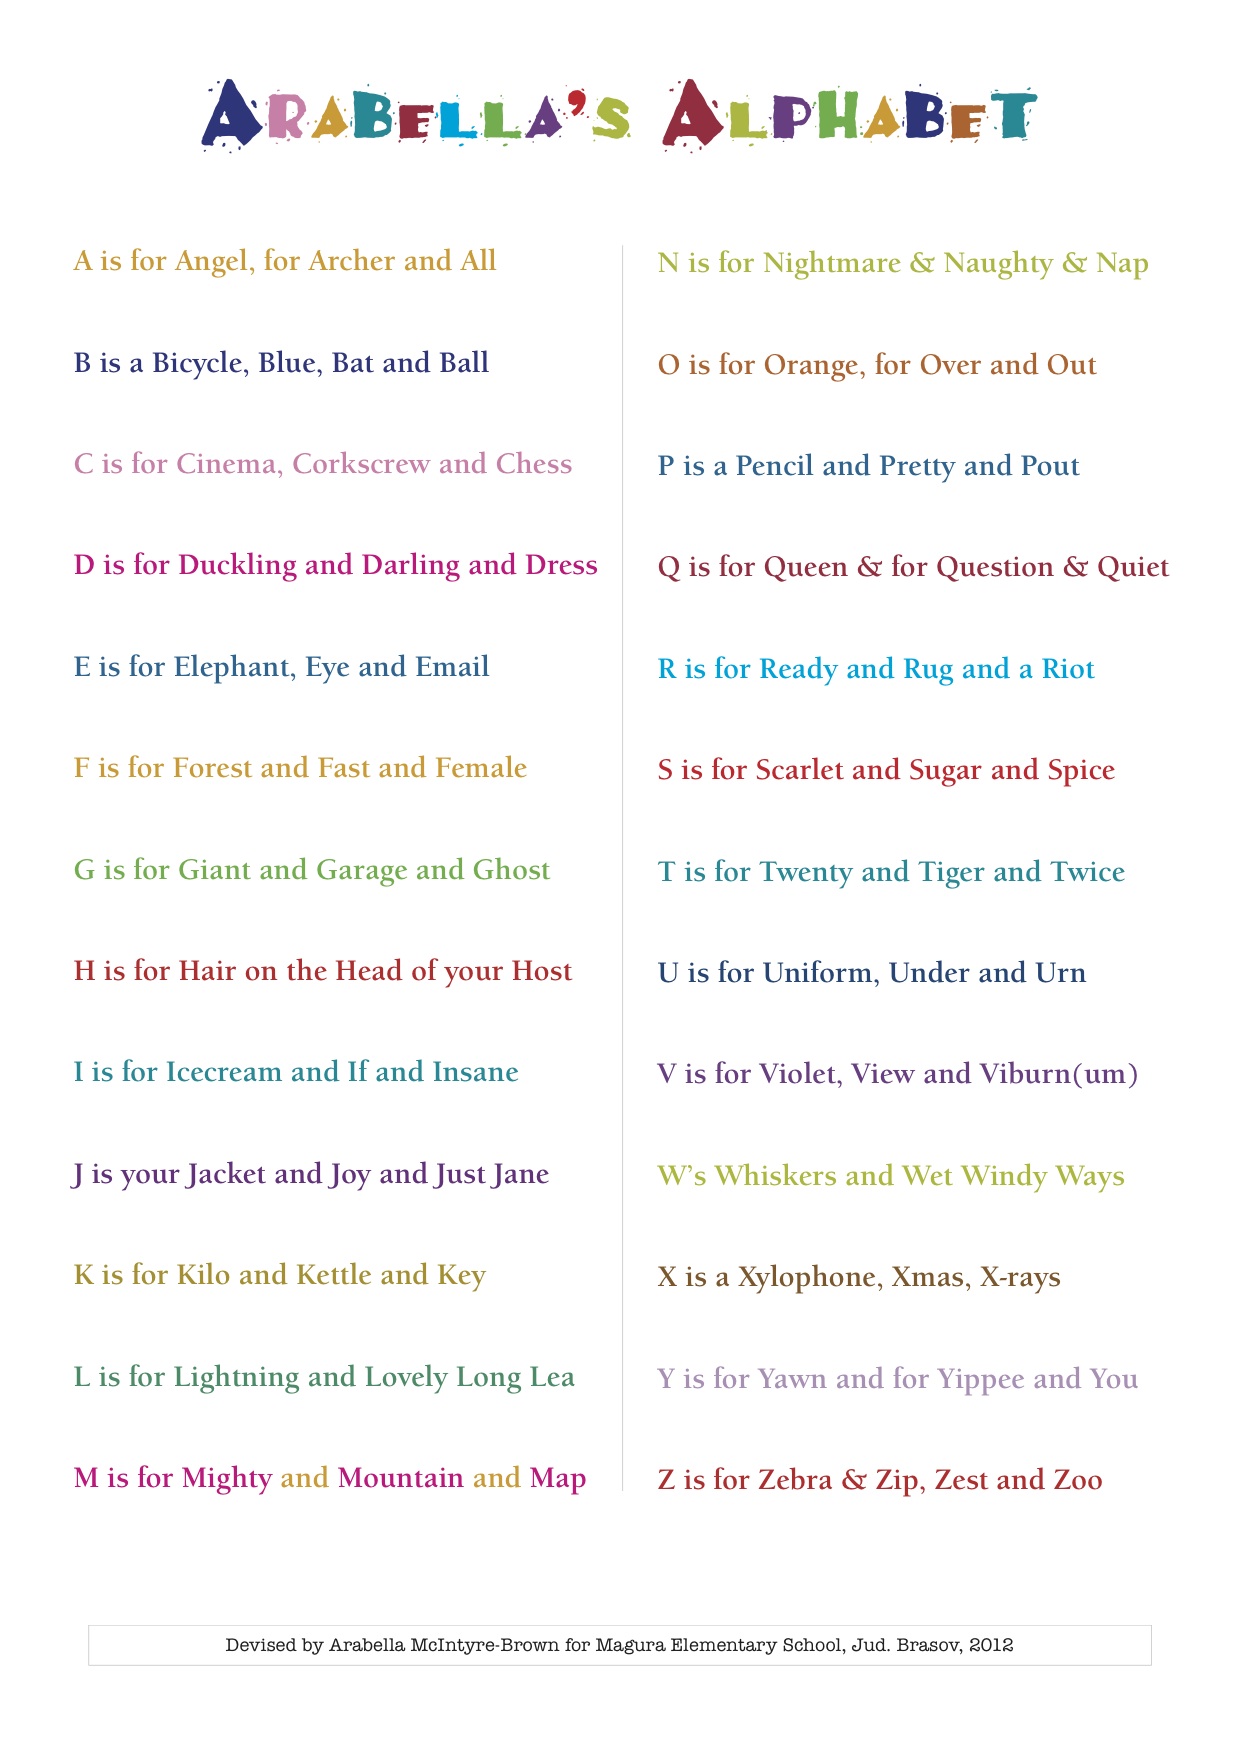 English alphabet rhyming couplets